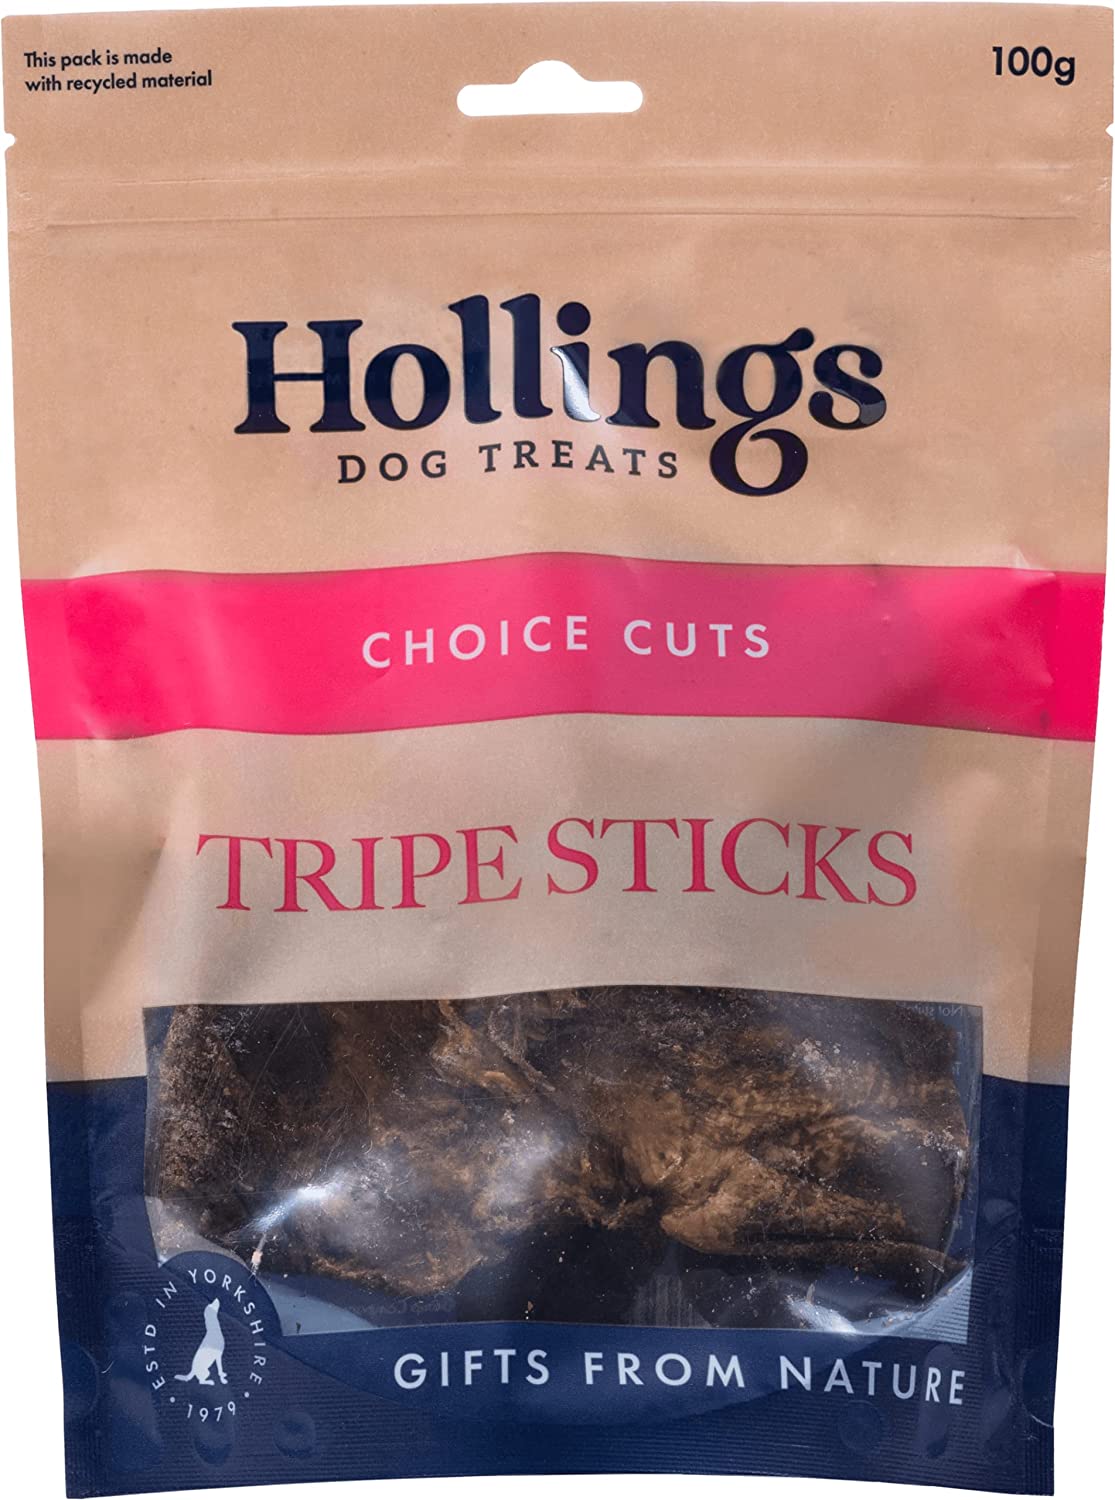 Hollings Choice Cuts Tripe Sticks Dog Treats 100g